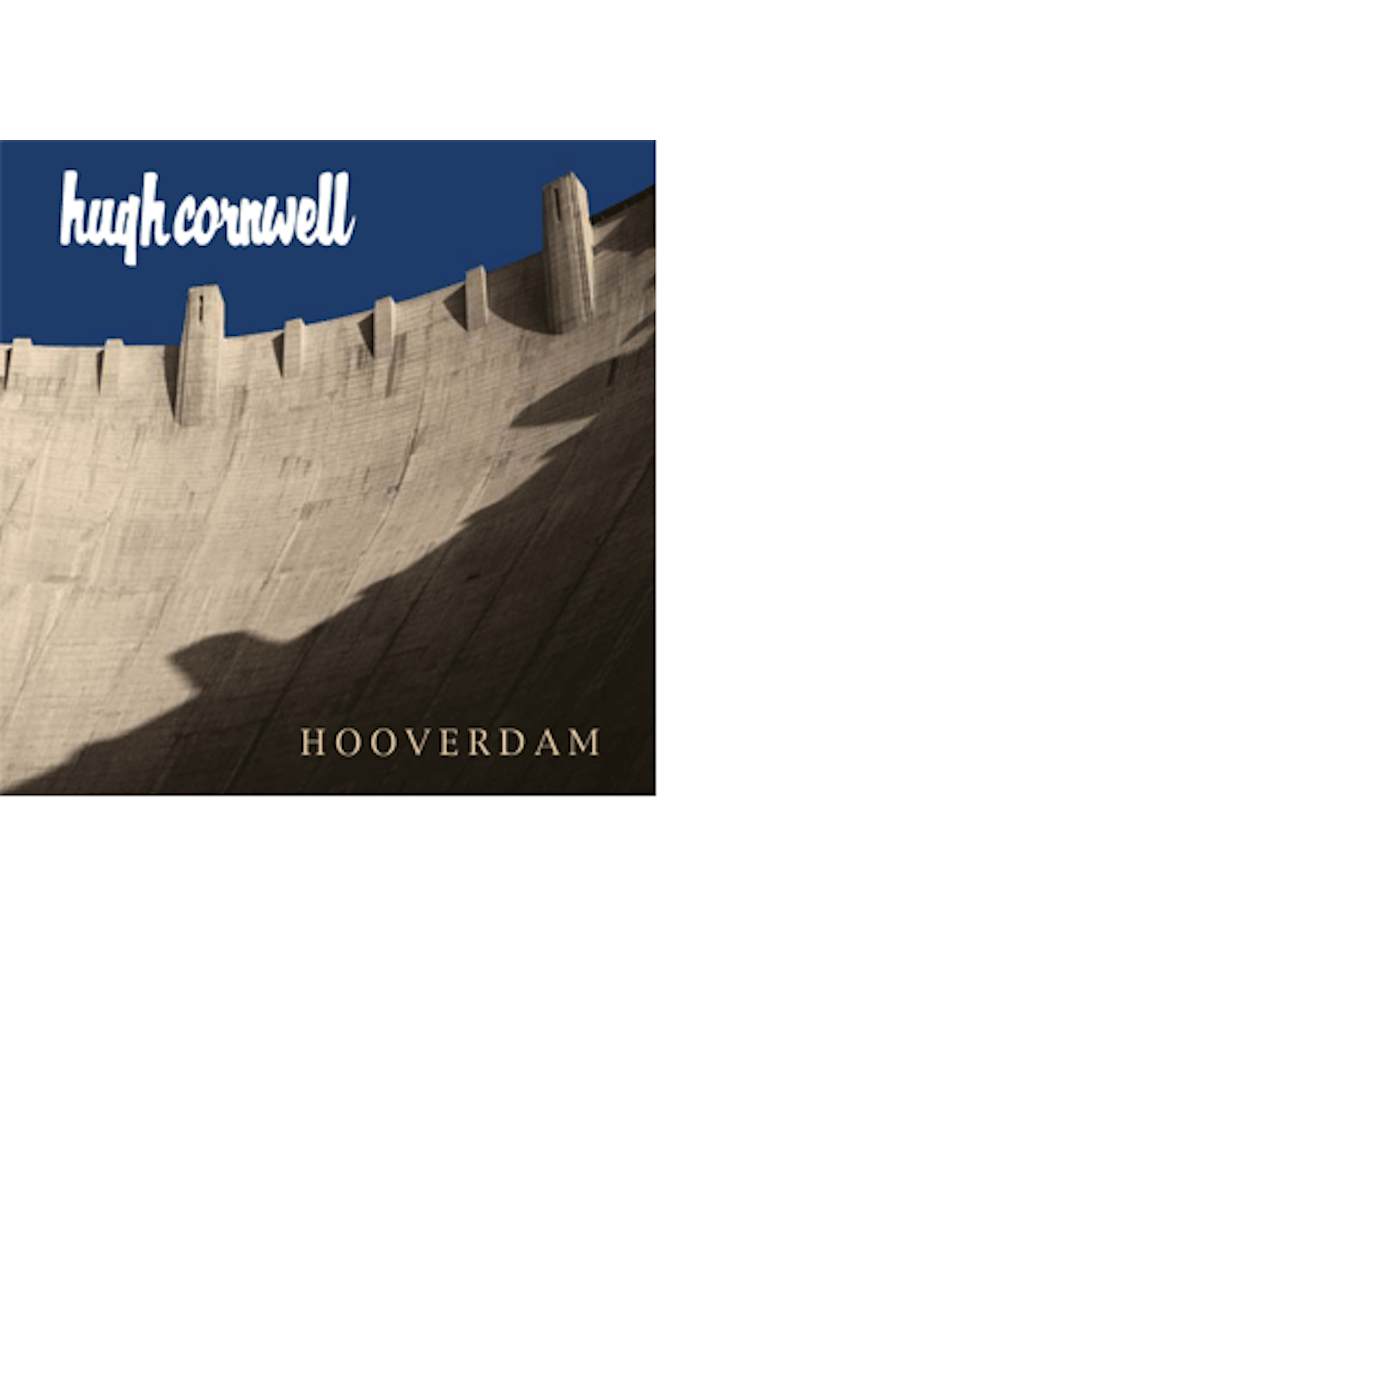 Hugh Cornwell HOOVERDAM CD